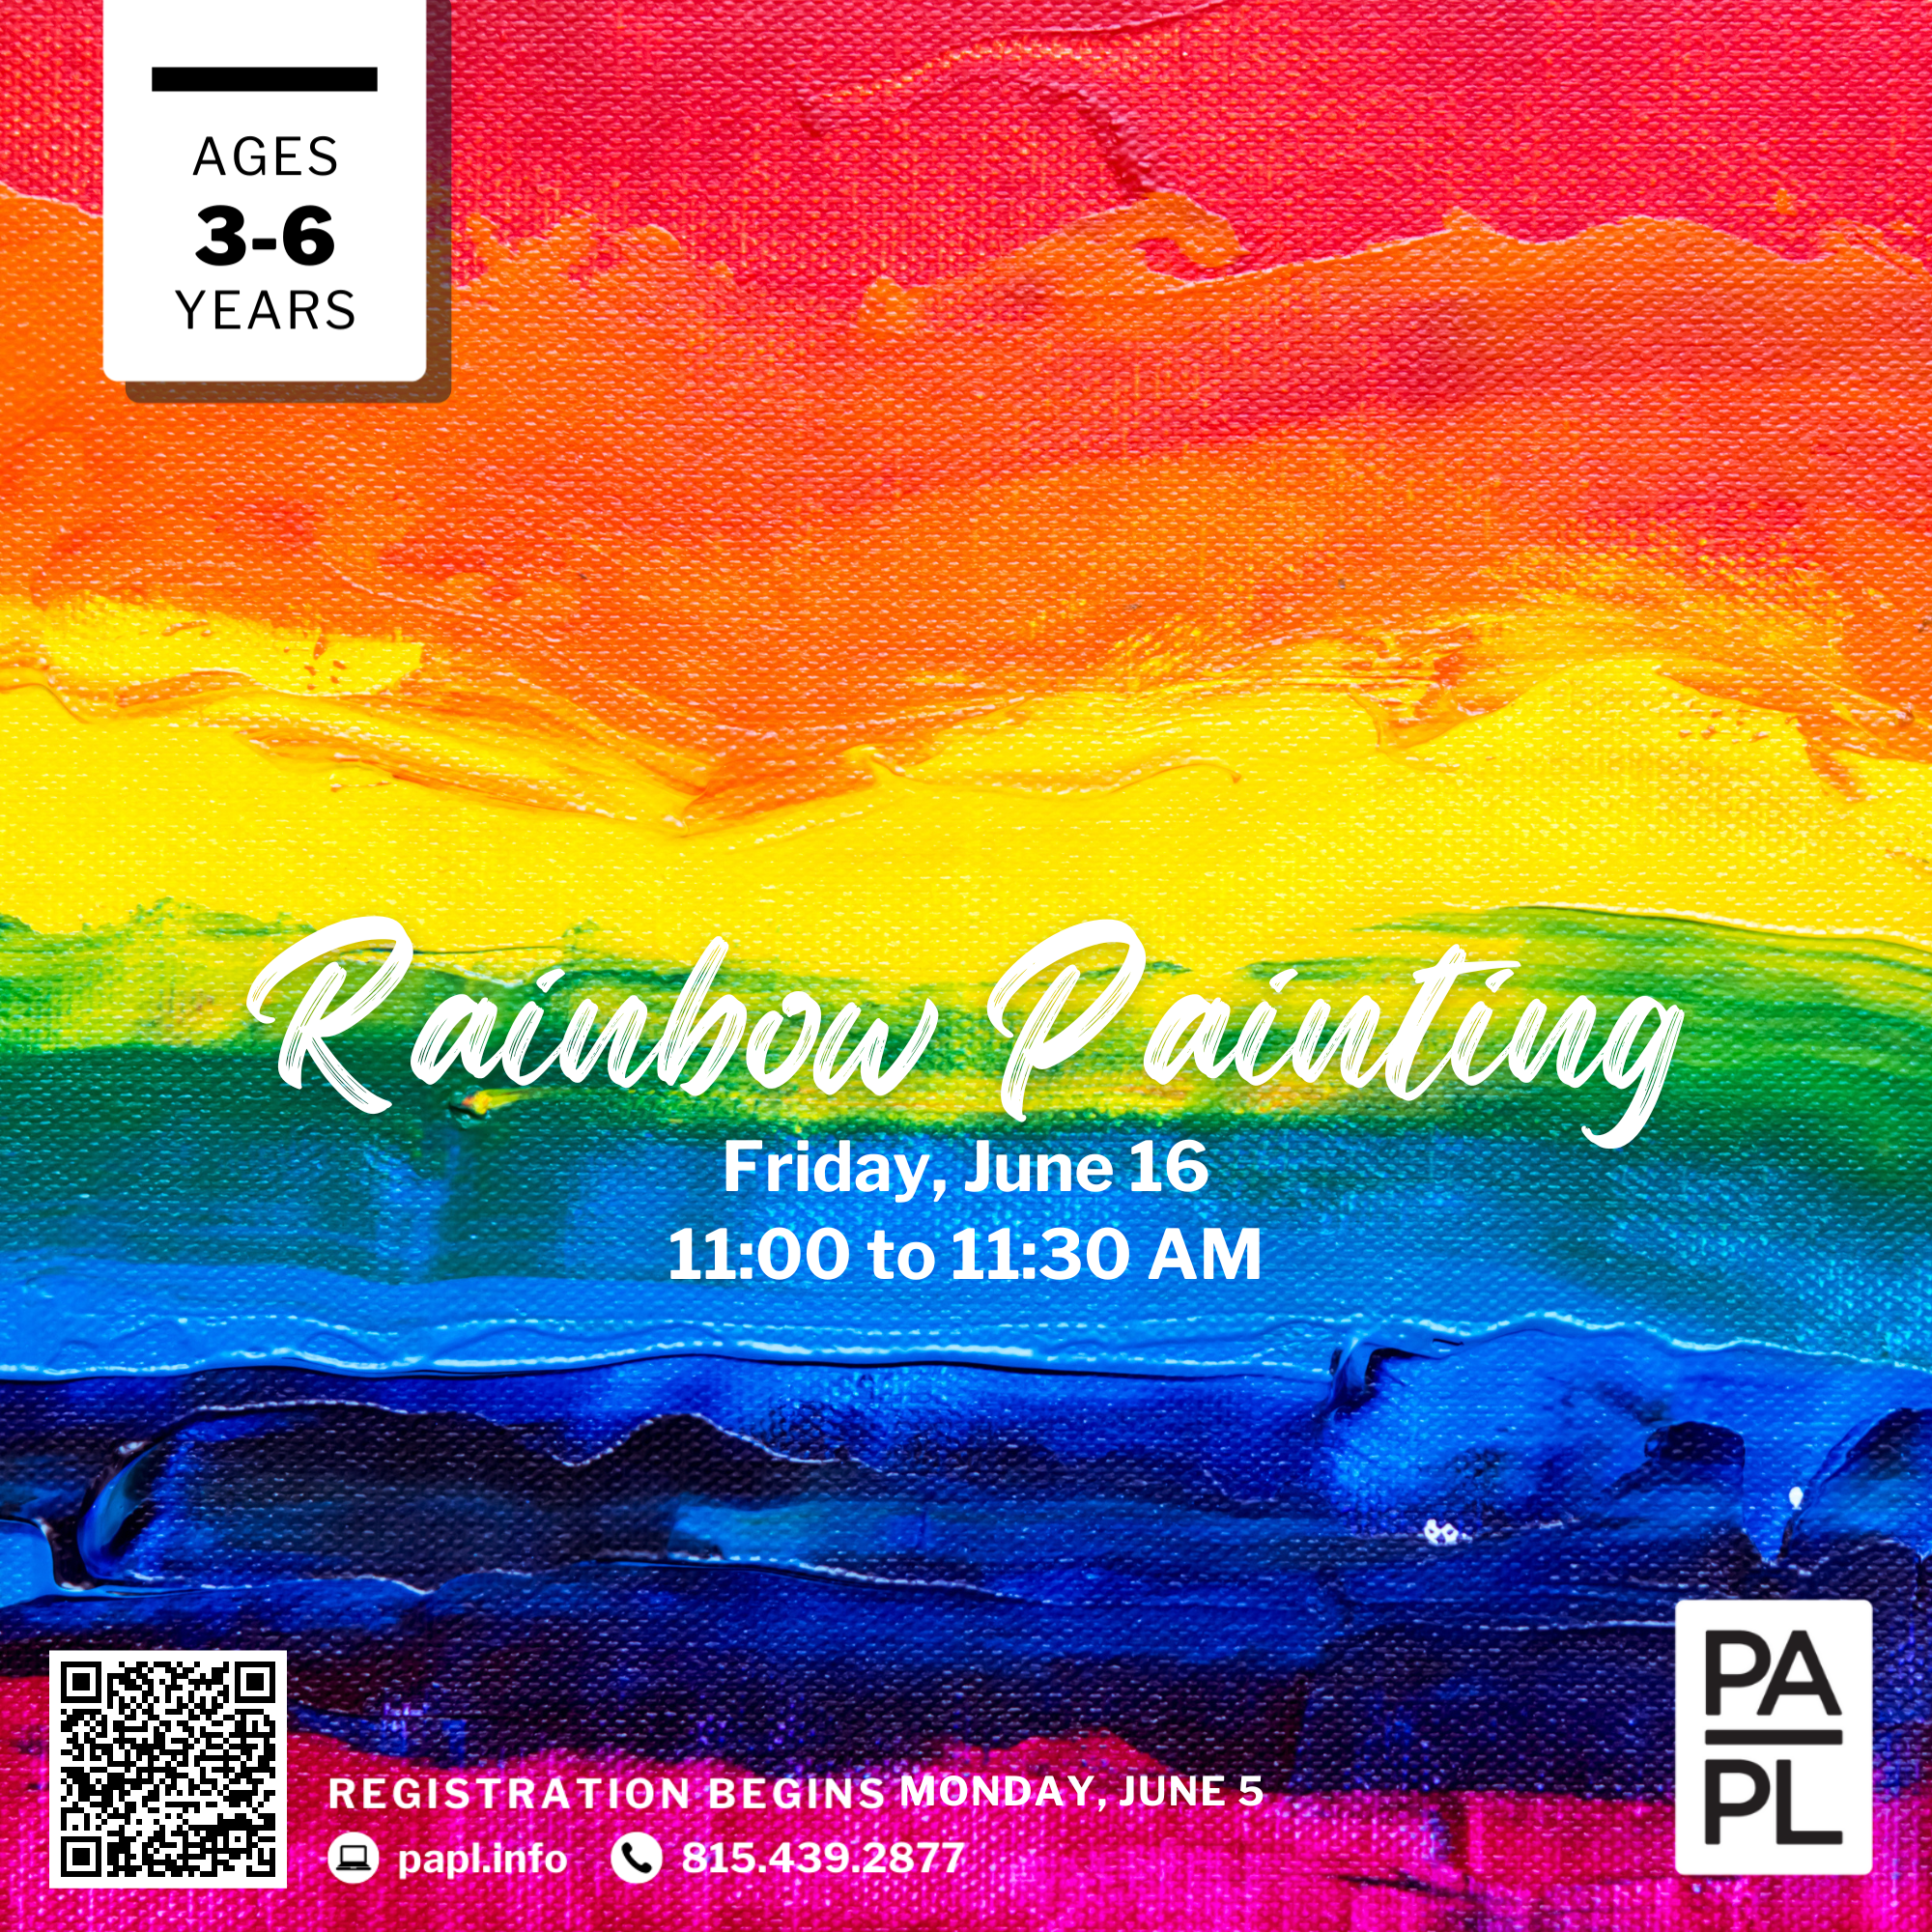 Rainbow Painting